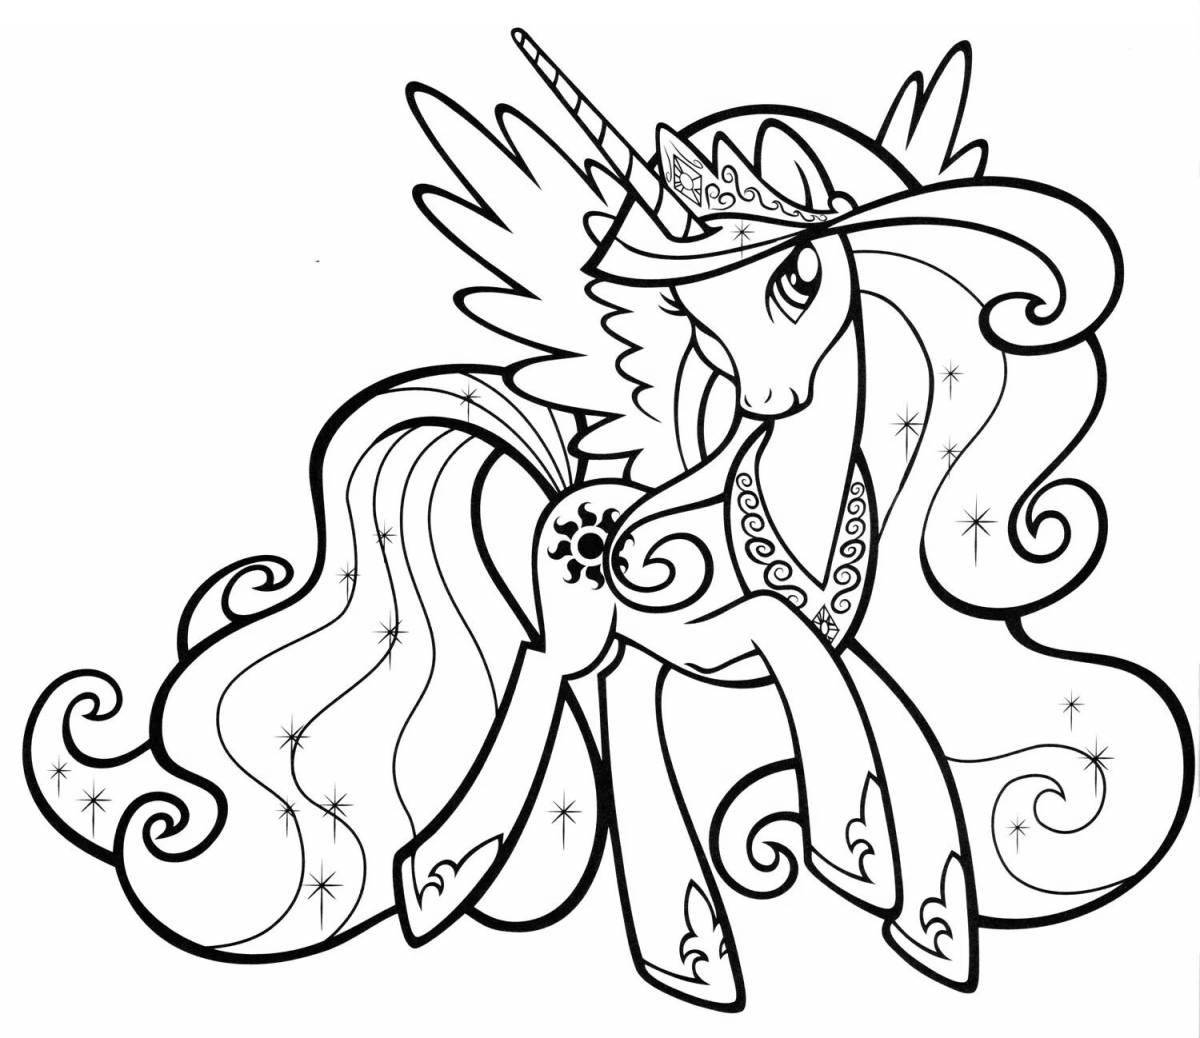 Celestia unicorn flawless coloring